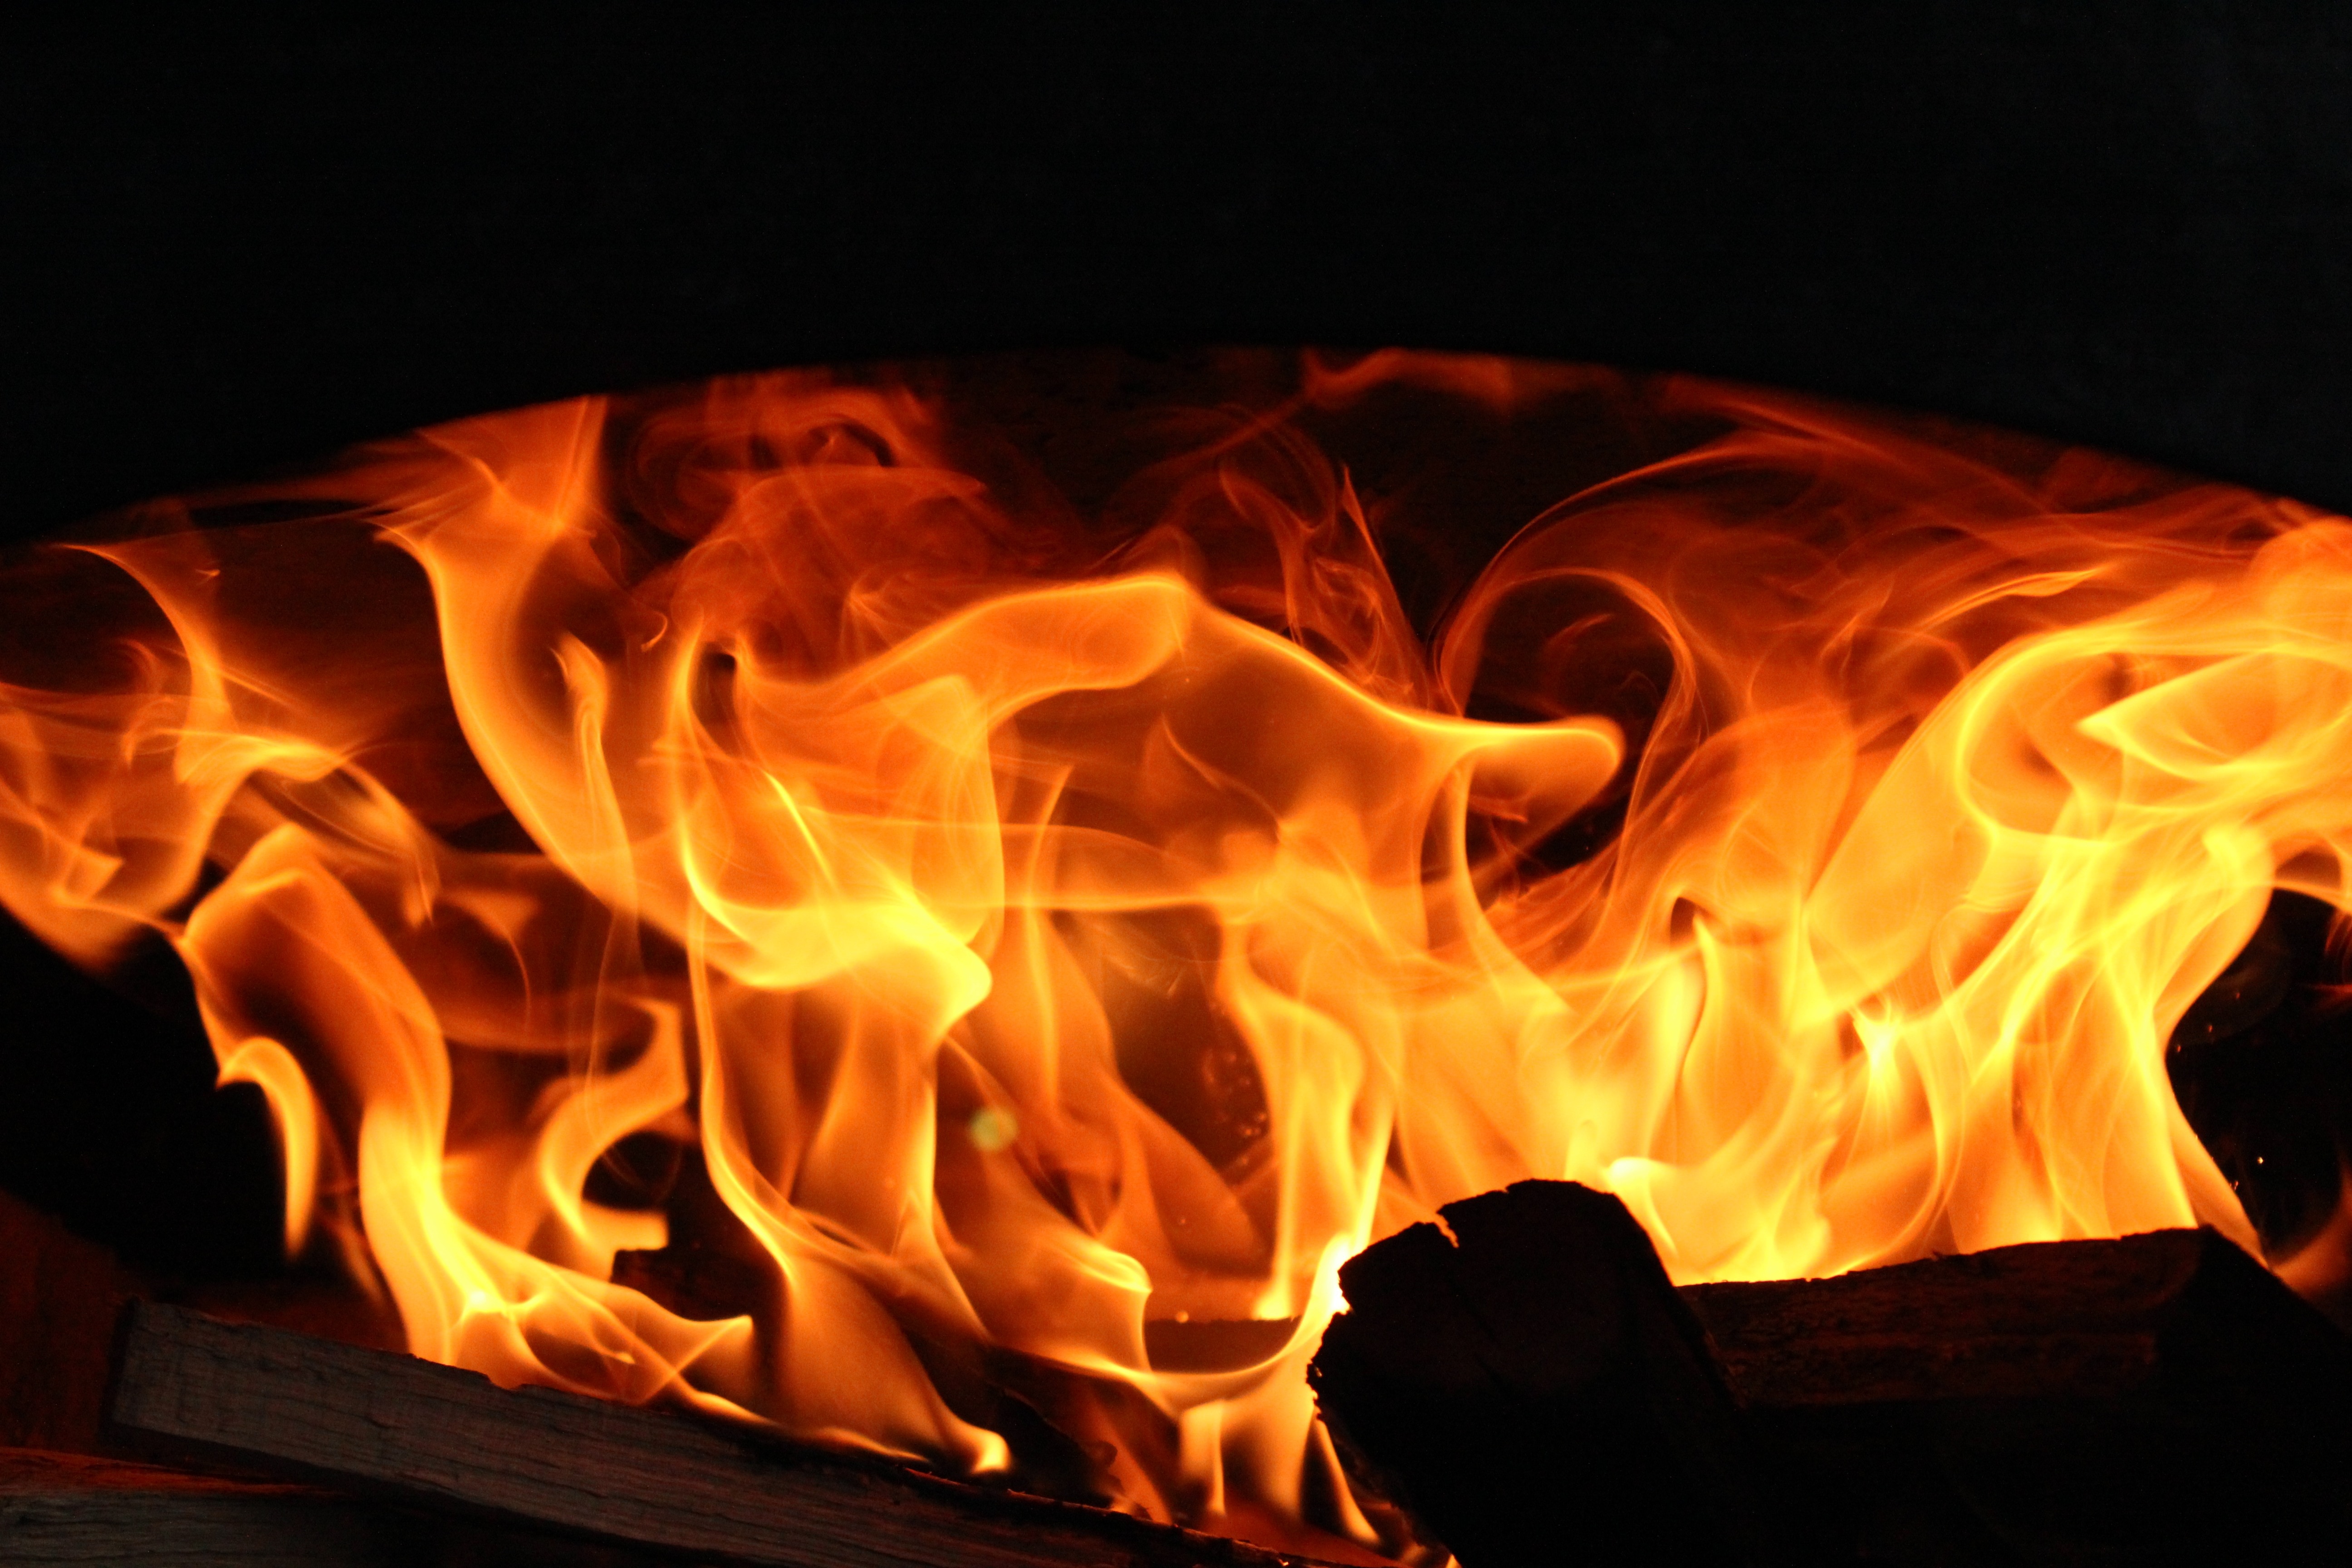 Heiss, Heat, Fire, Cozy, Fireplace, burning, flame